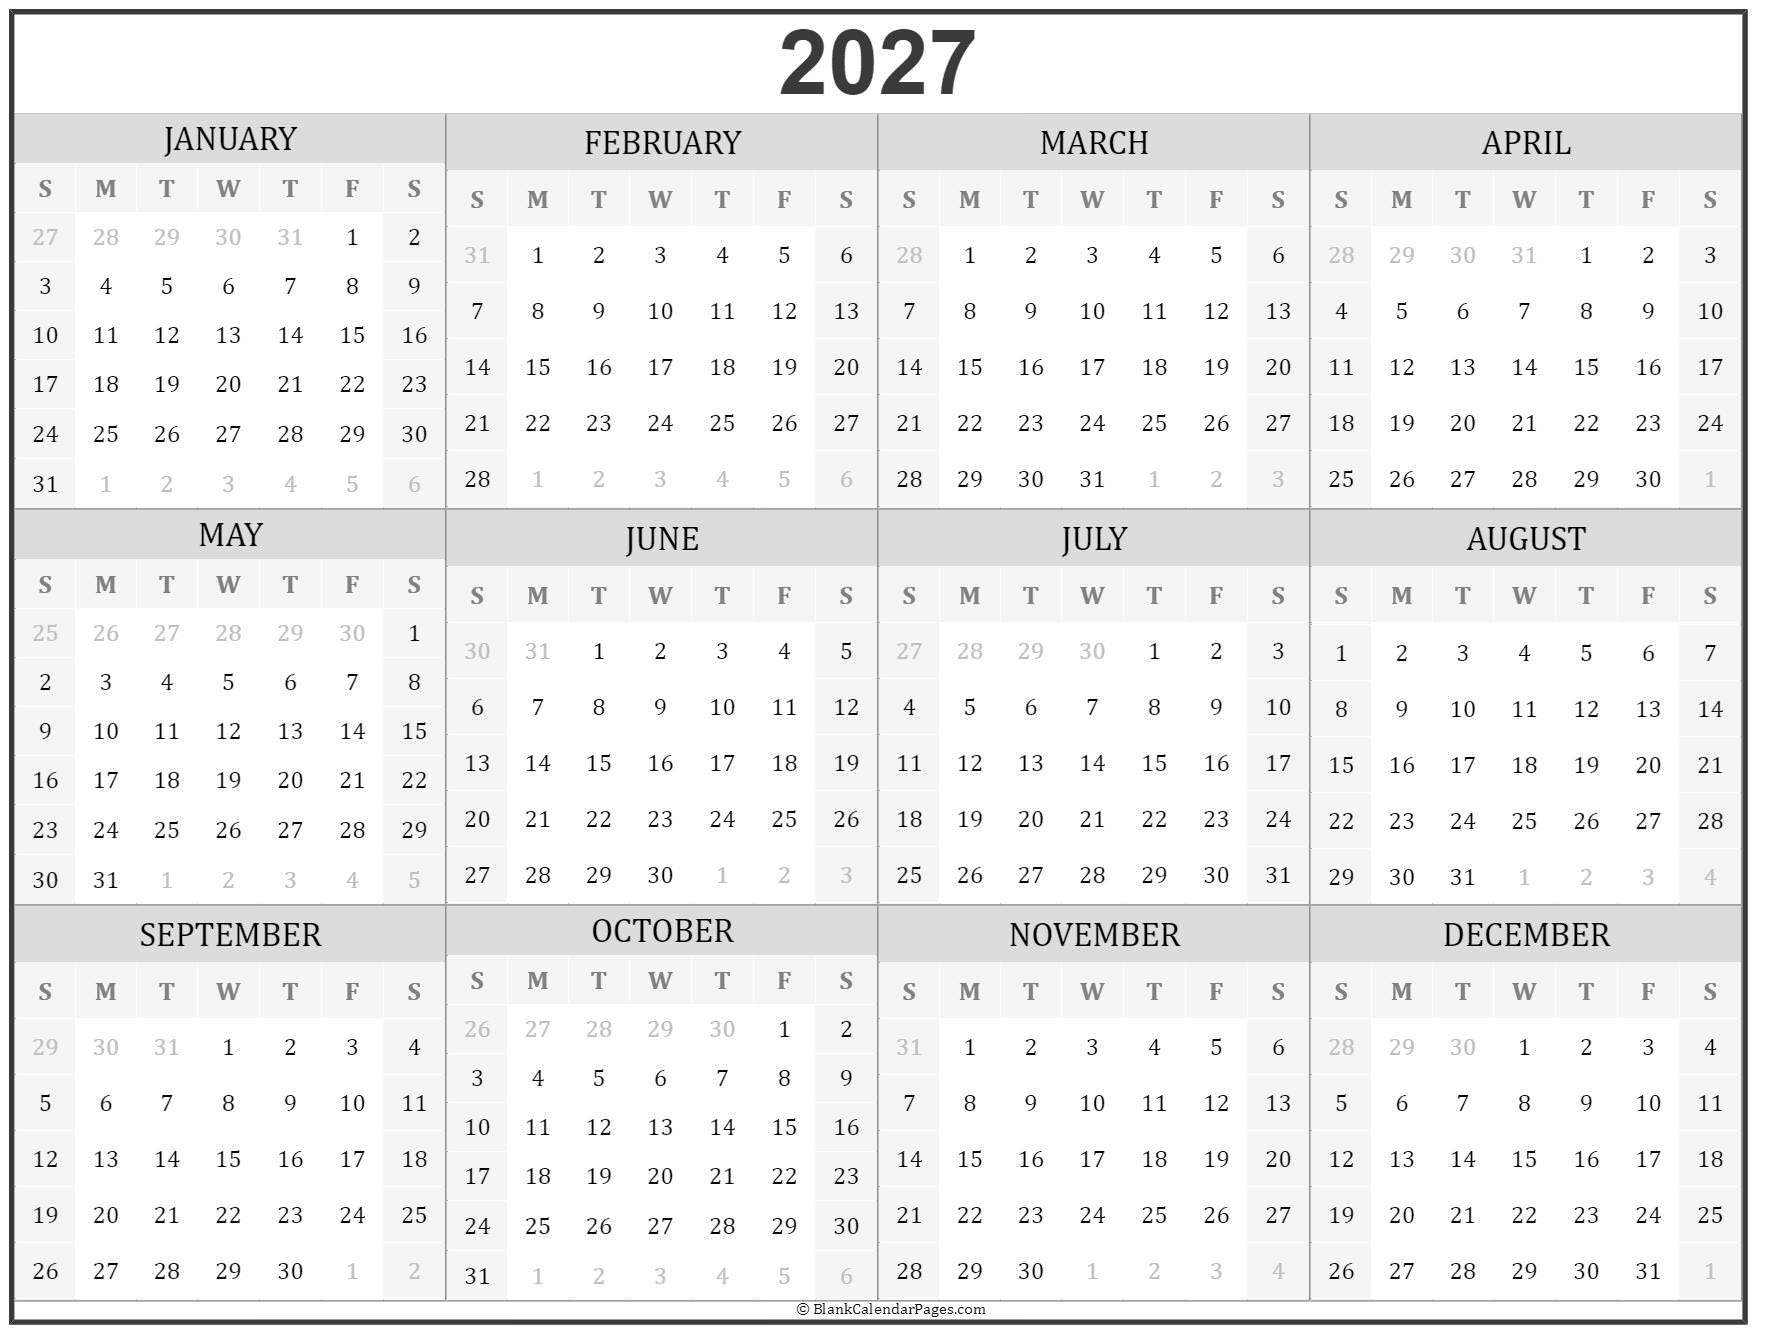 2027-year-calendar-yearly-printable